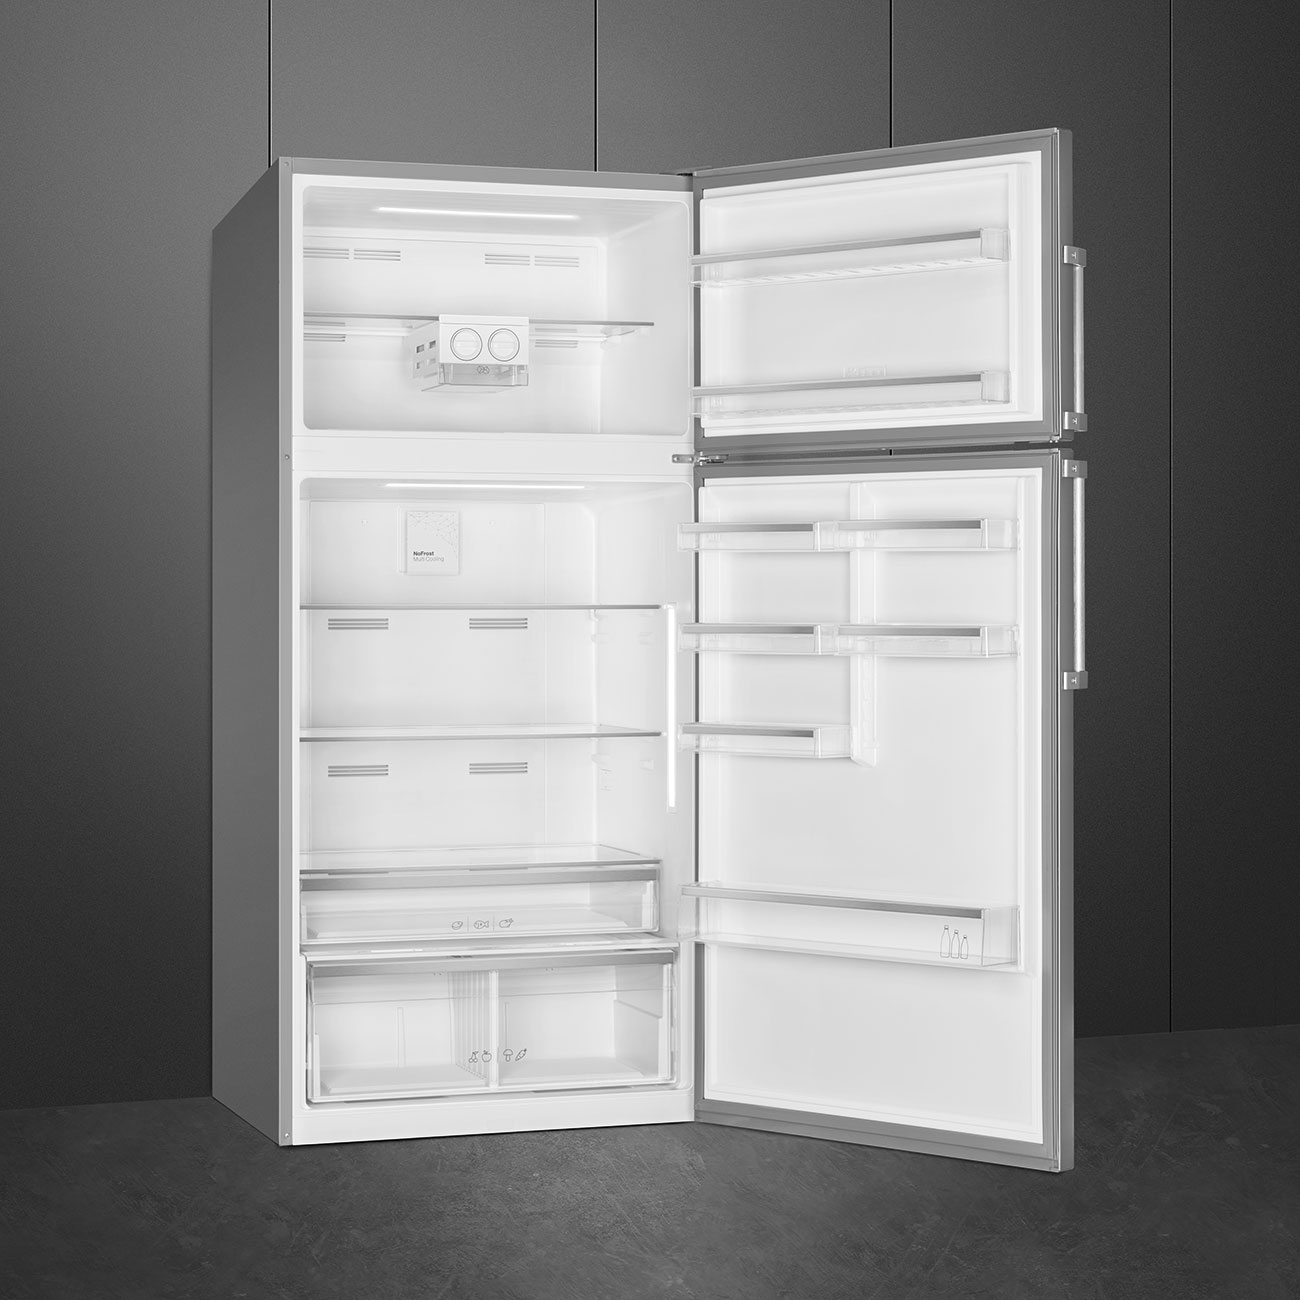 Top Mount Free standing refrigerator - Smeg_4